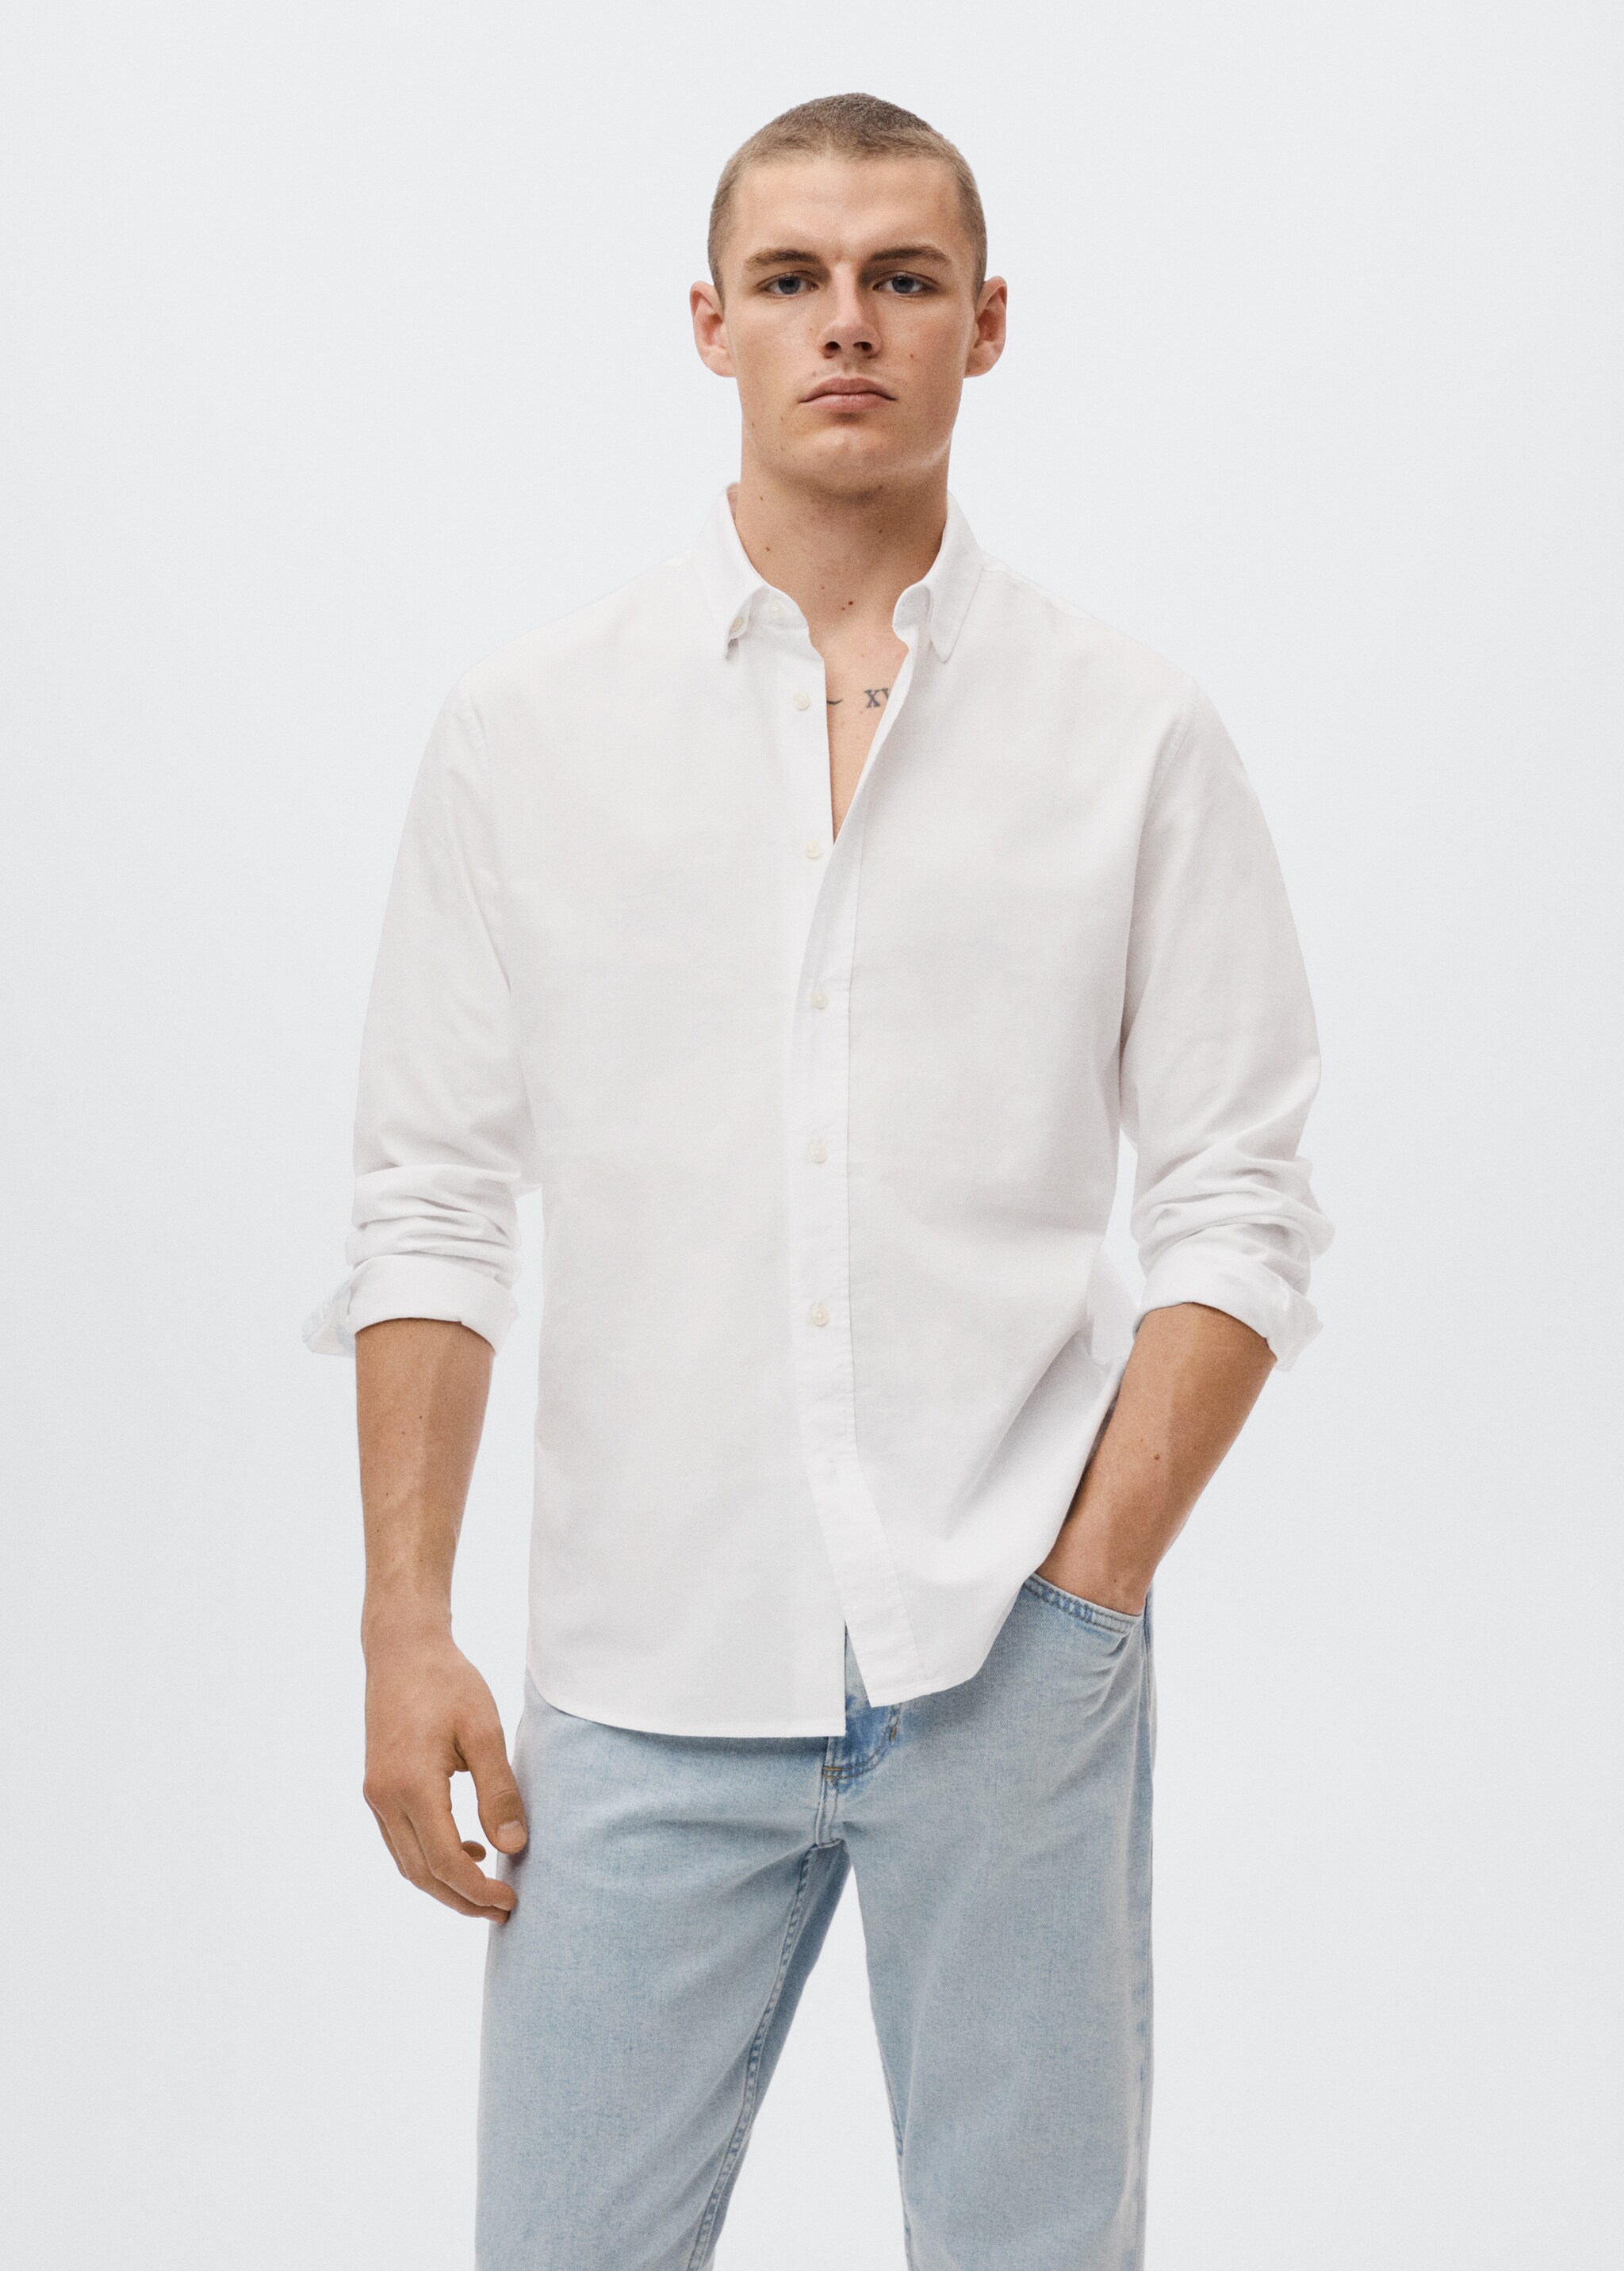 Regular fit cotton shirt - Medium plane